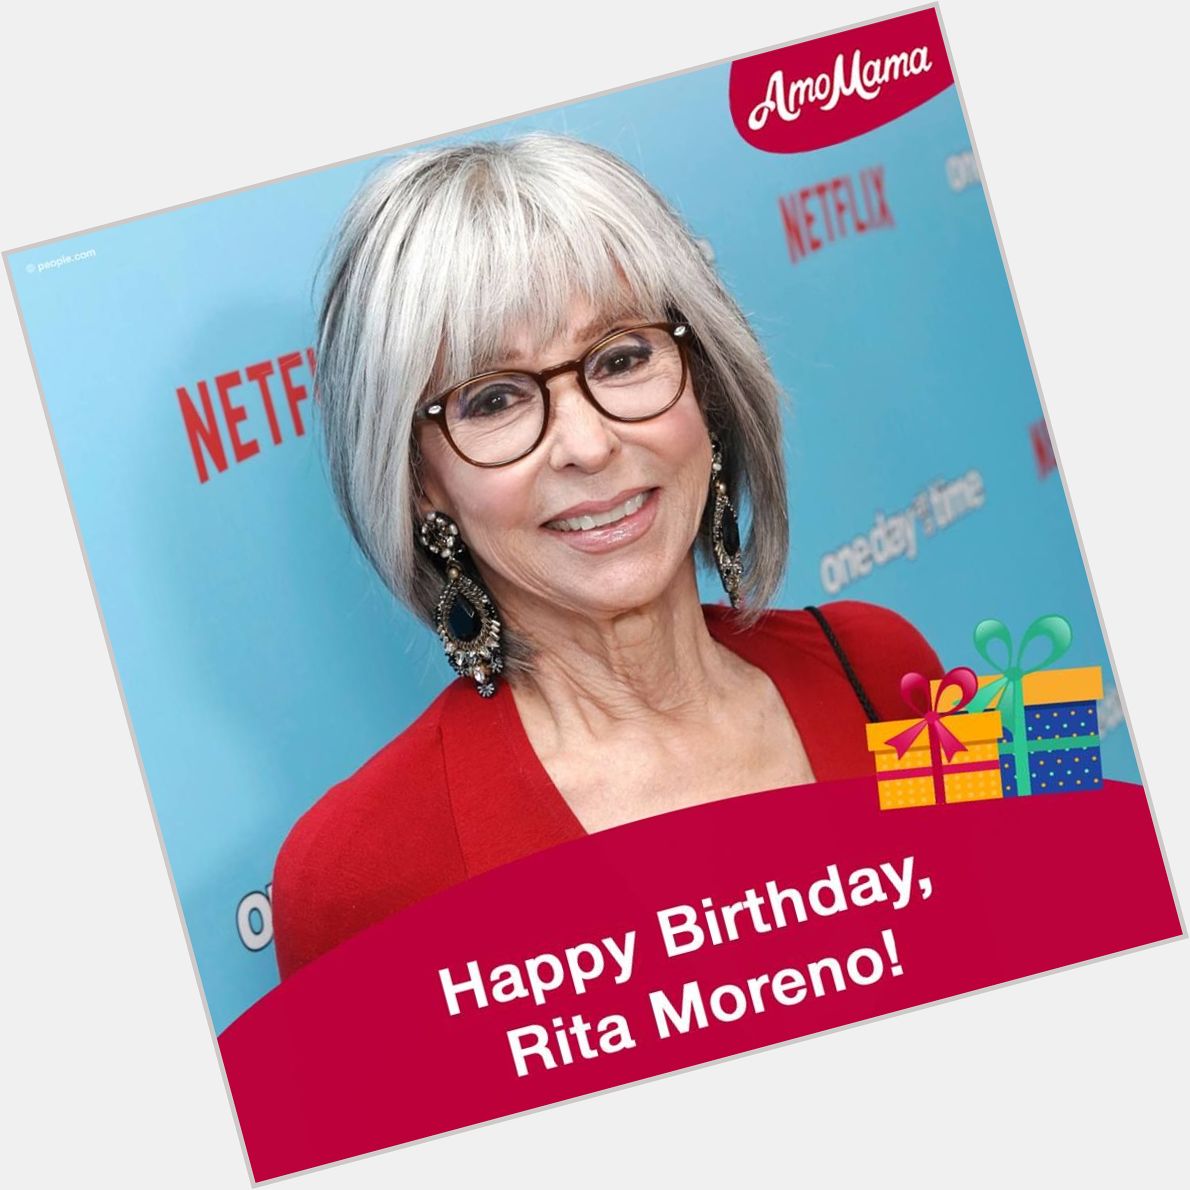  We wish Rita Moreno a wonderful 87th Birthday! Many happy returns!  